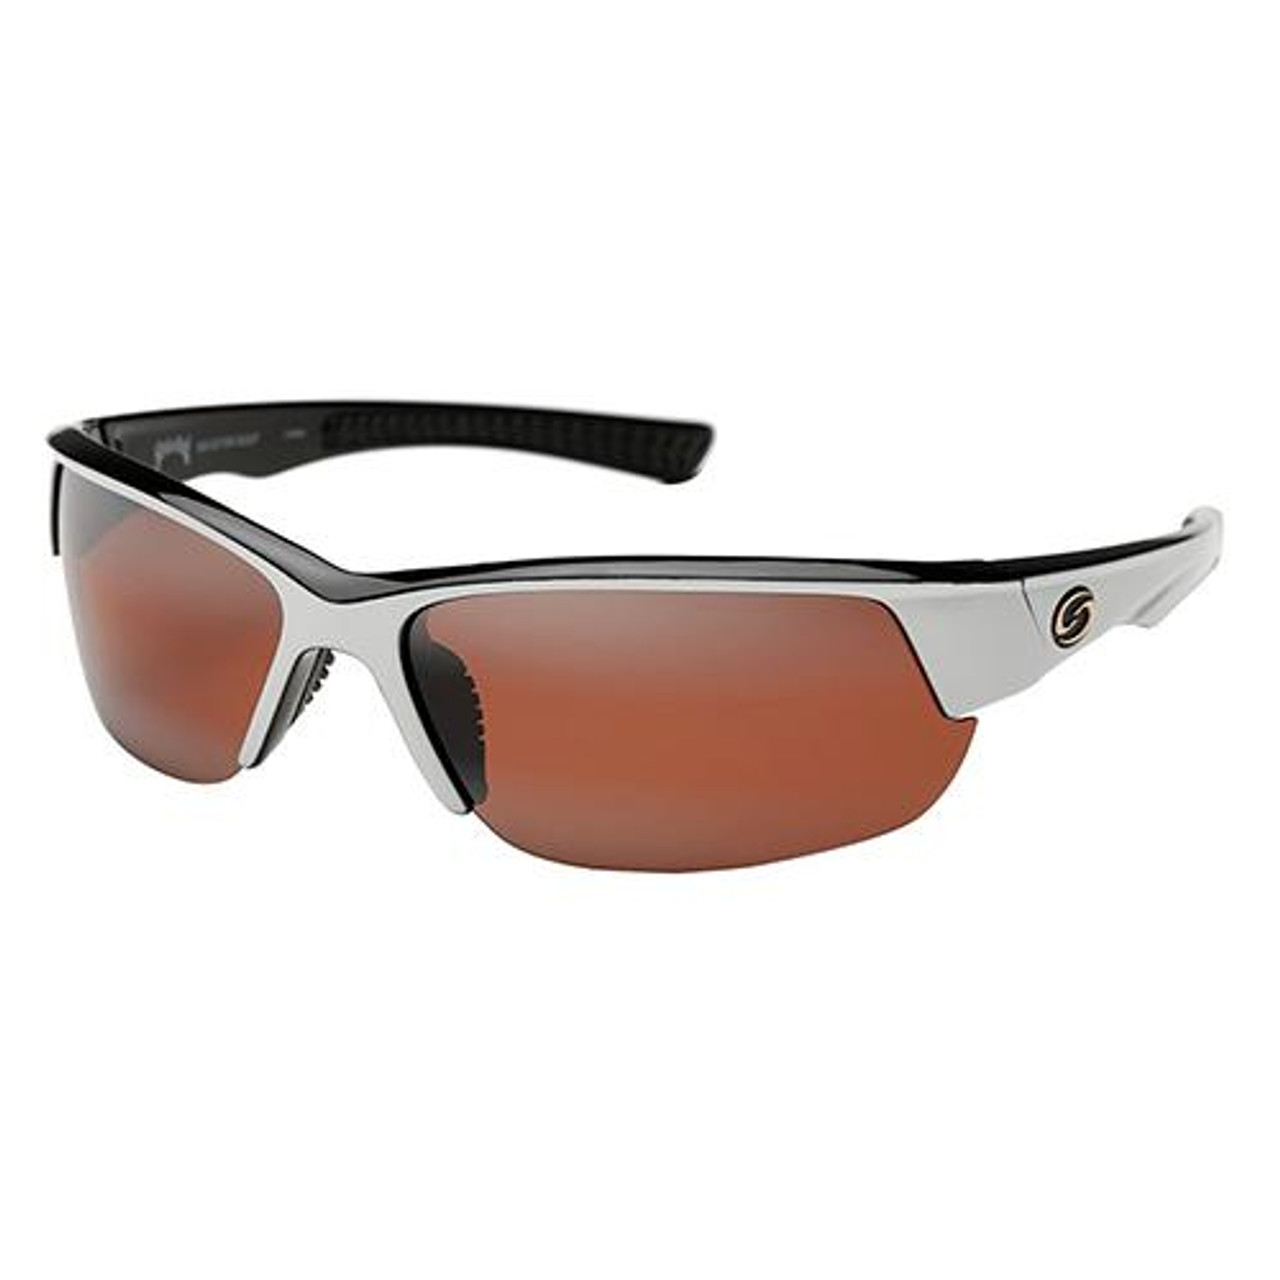 Strike King Lures S11 Optics Sunglasses Gulf Style, Shiny White/Black Two  Tone Frame, Dark Amber Brown Lens